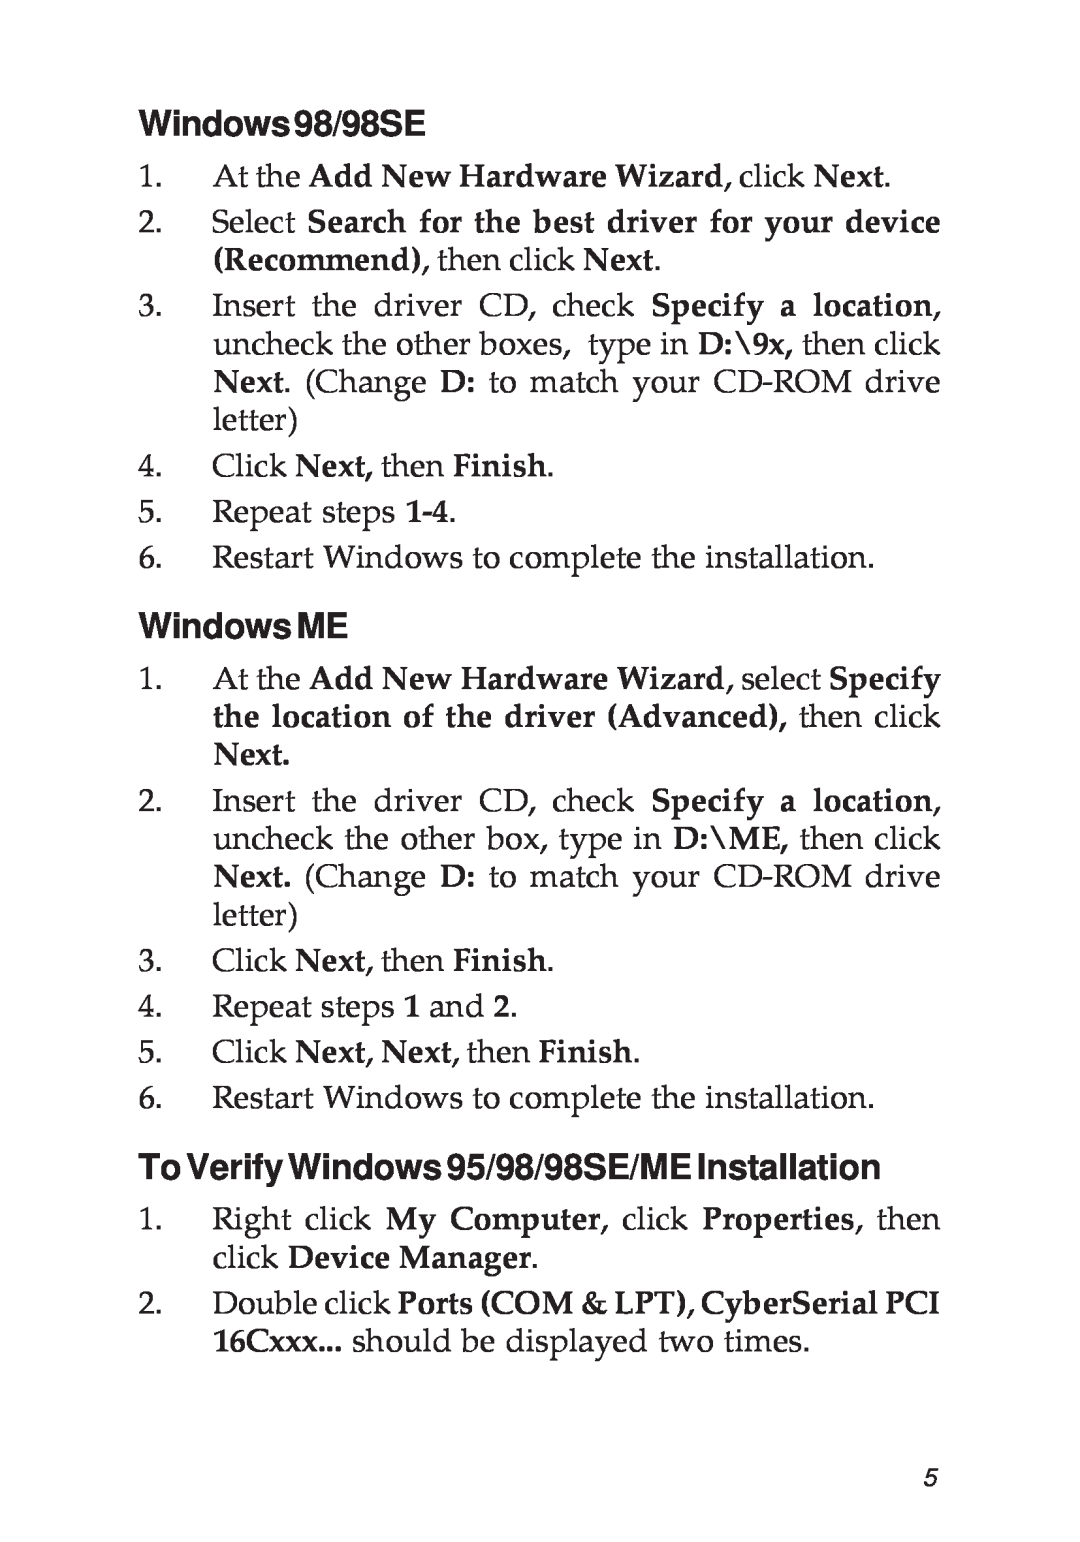 SIIG 2S manual Windows98/98SE, Windows ME, To Verify Windows 95/98/98SE/ME Installation 